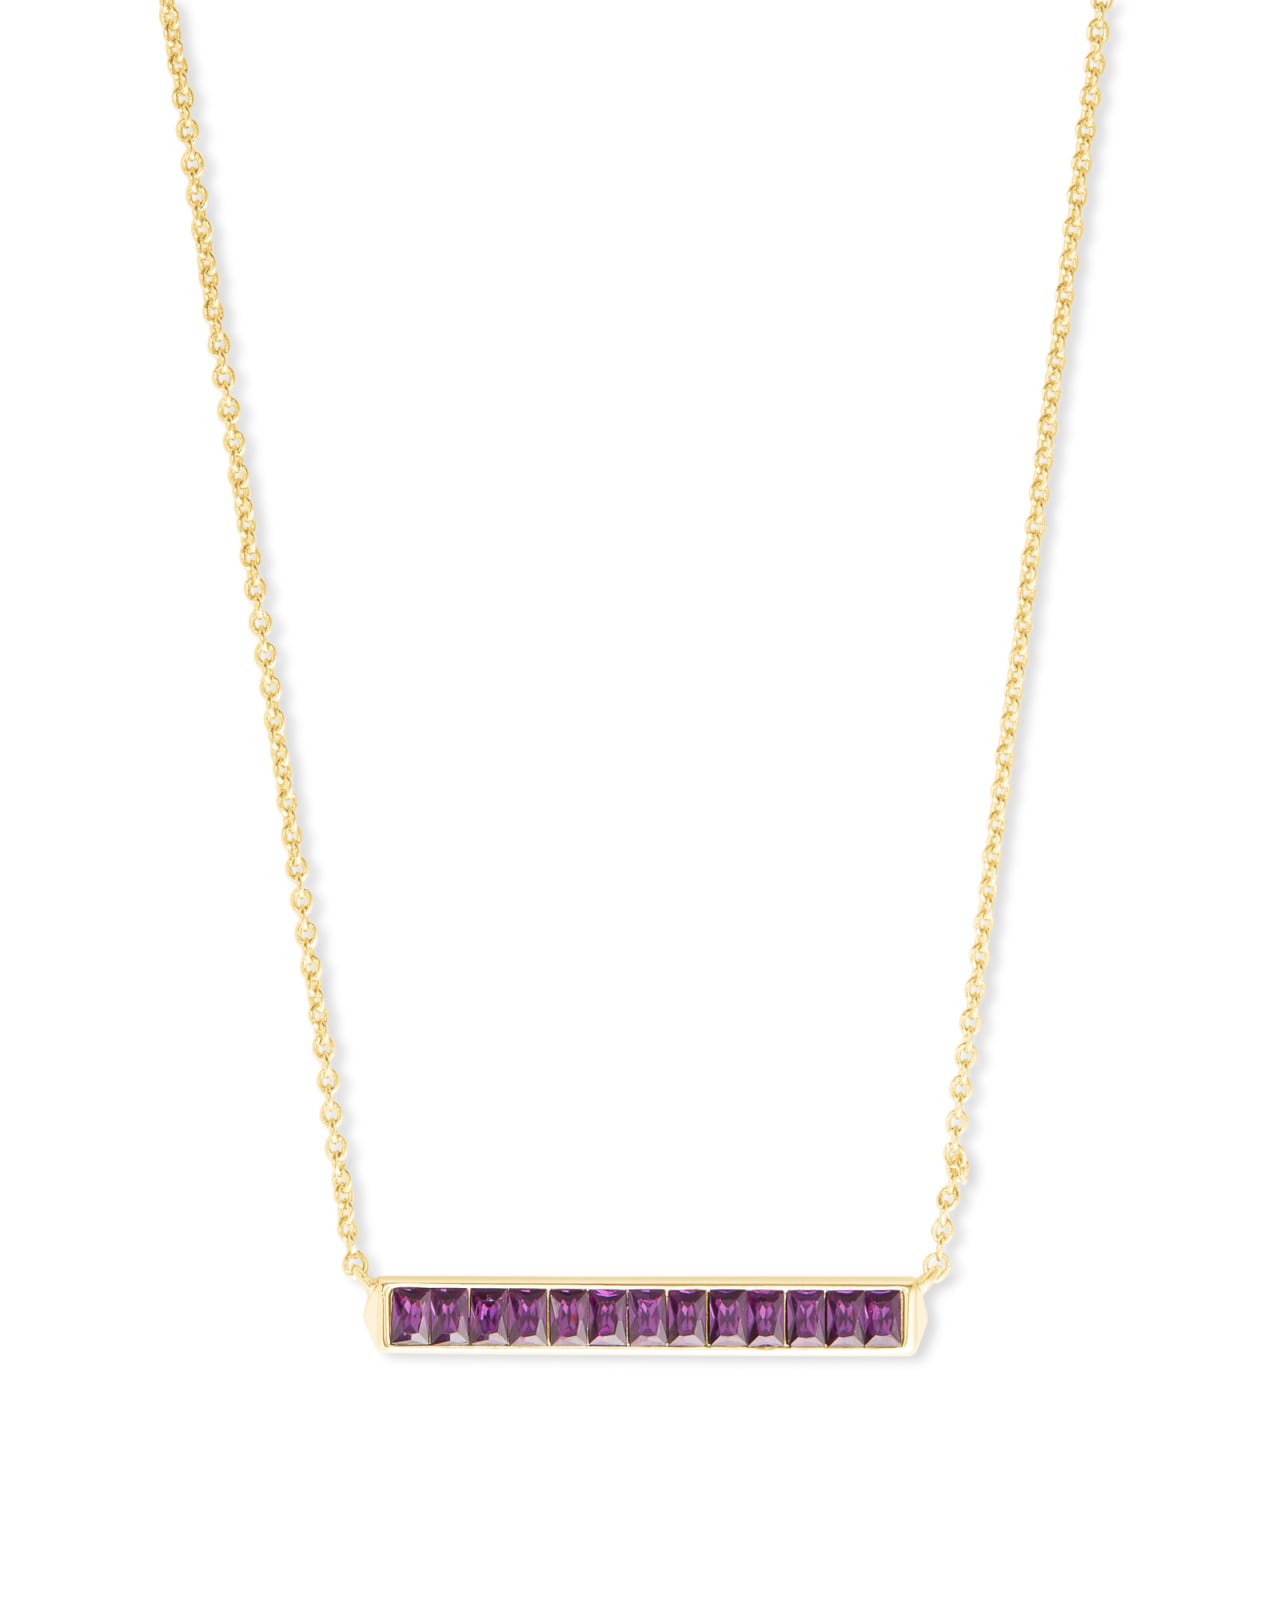 Jack Gold Short Pendant Necklace in Purple Crystal image number 0